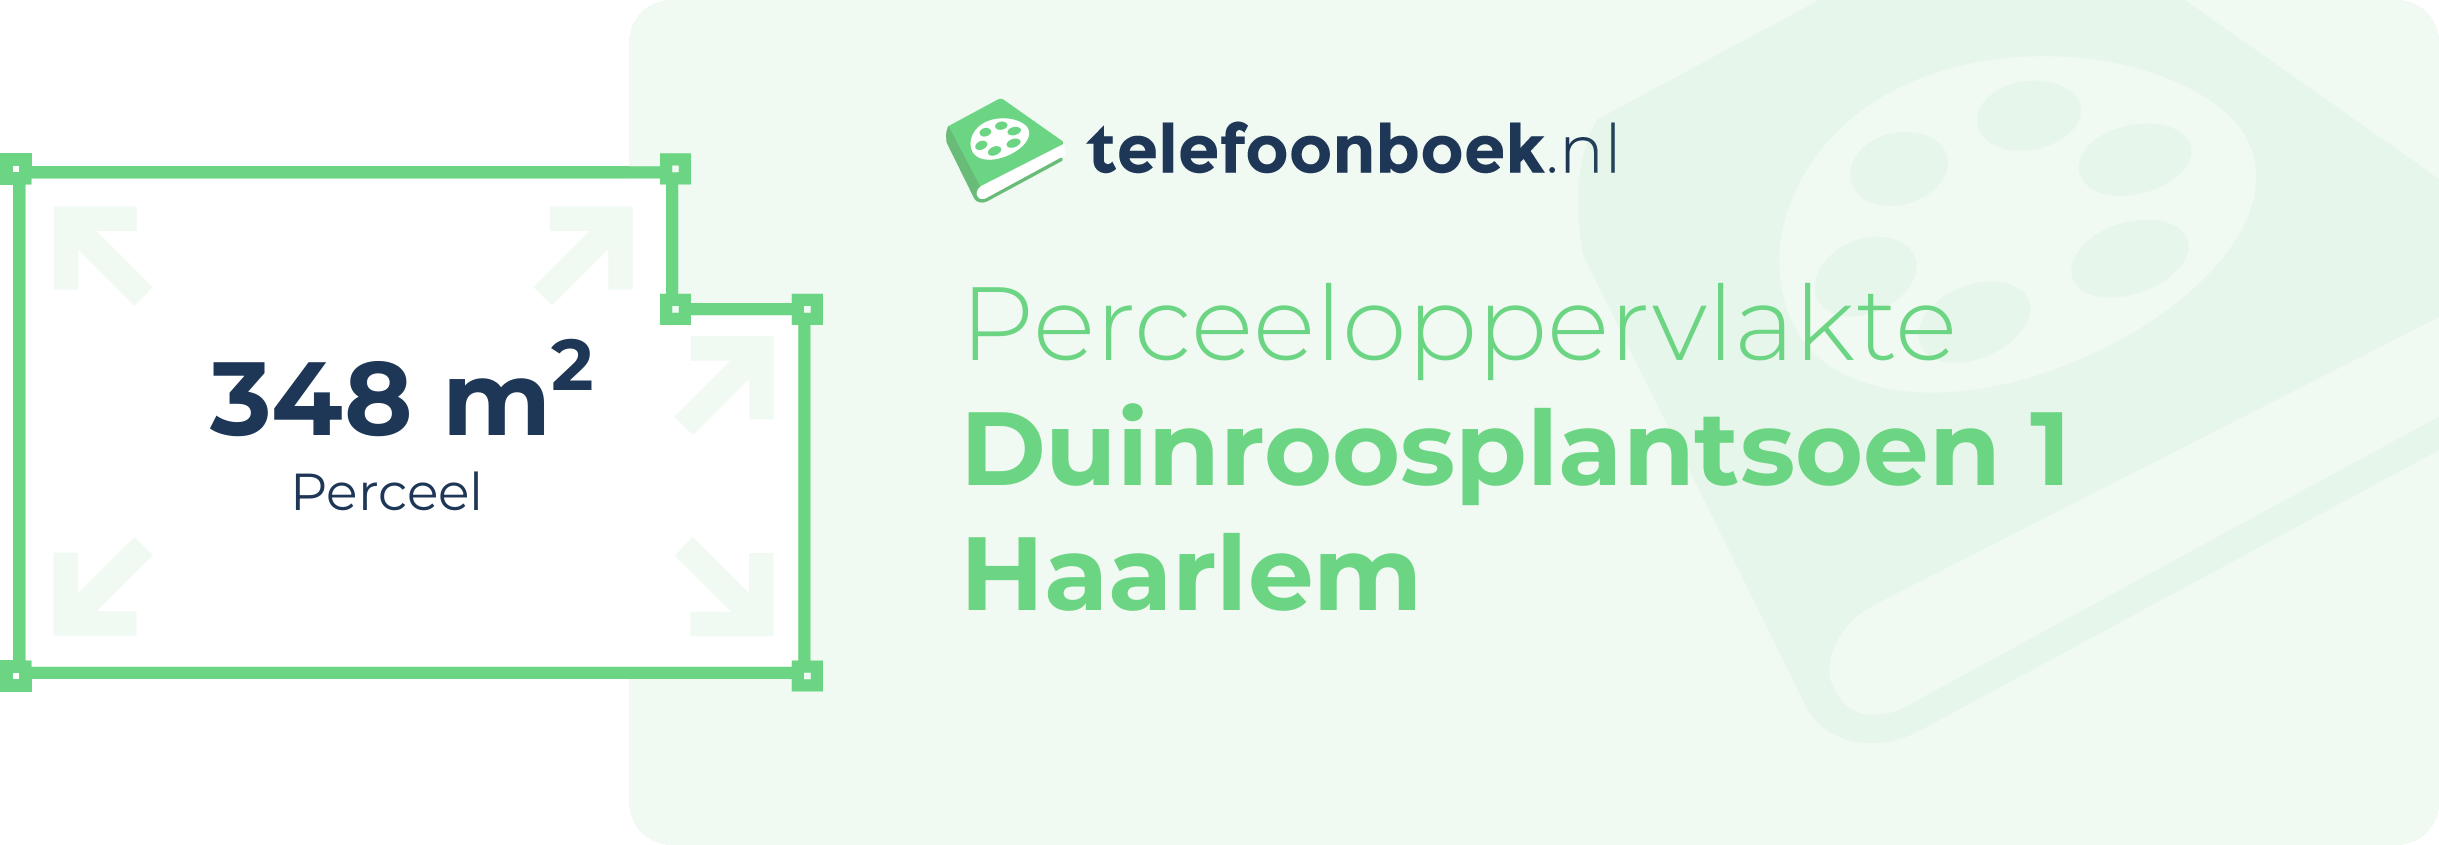 Perceeloppervlakte Duinroosplantsoen 1 Haarlem